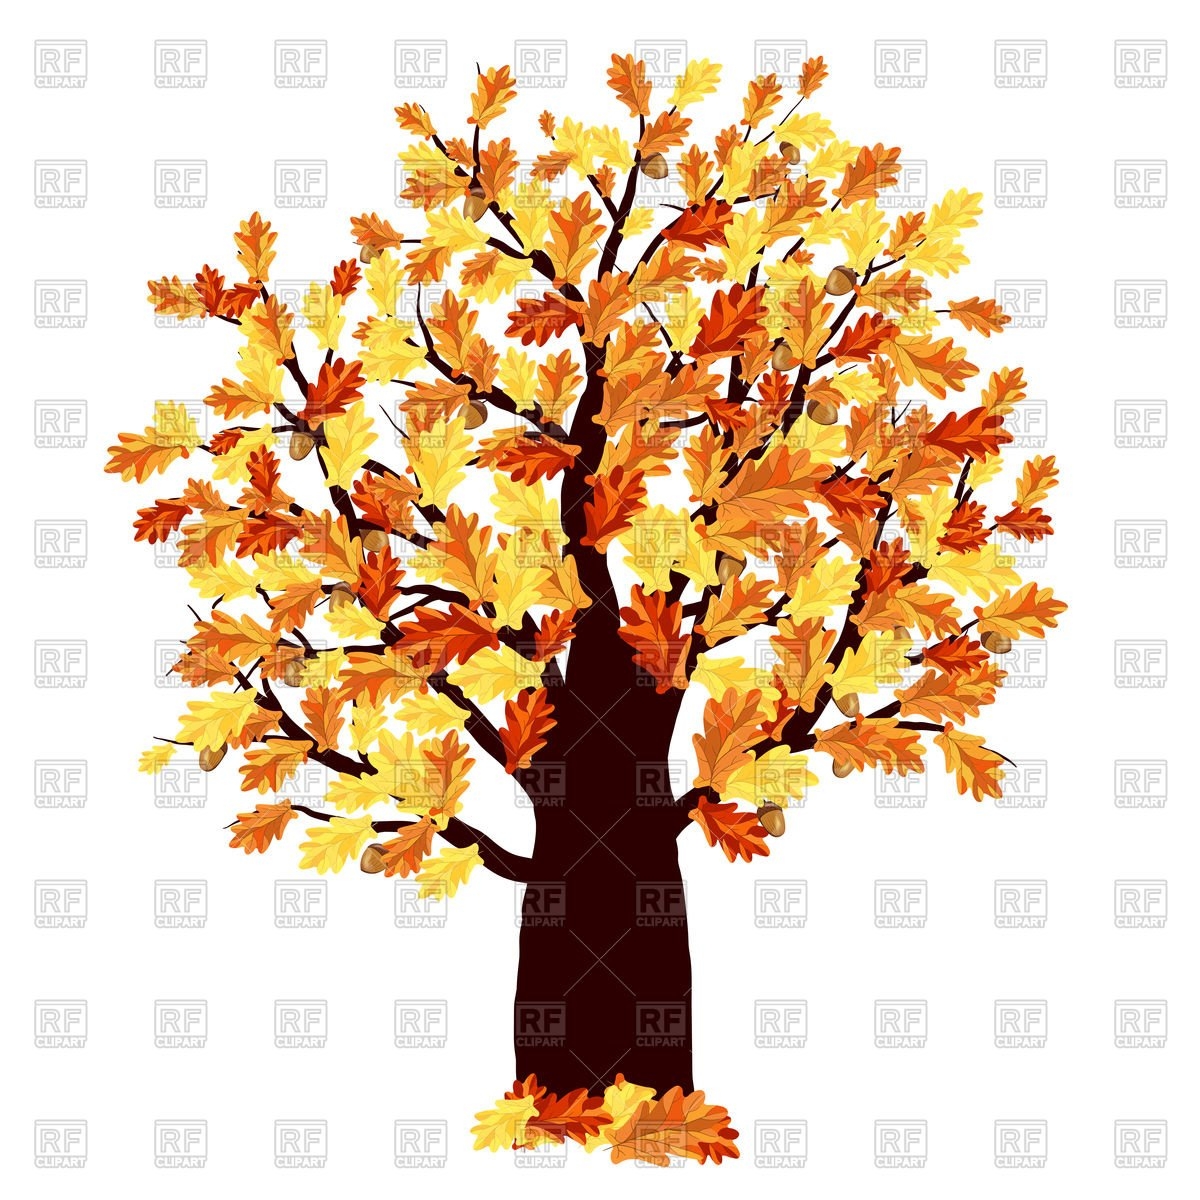 Дуб осенью рисунок - 36 фото